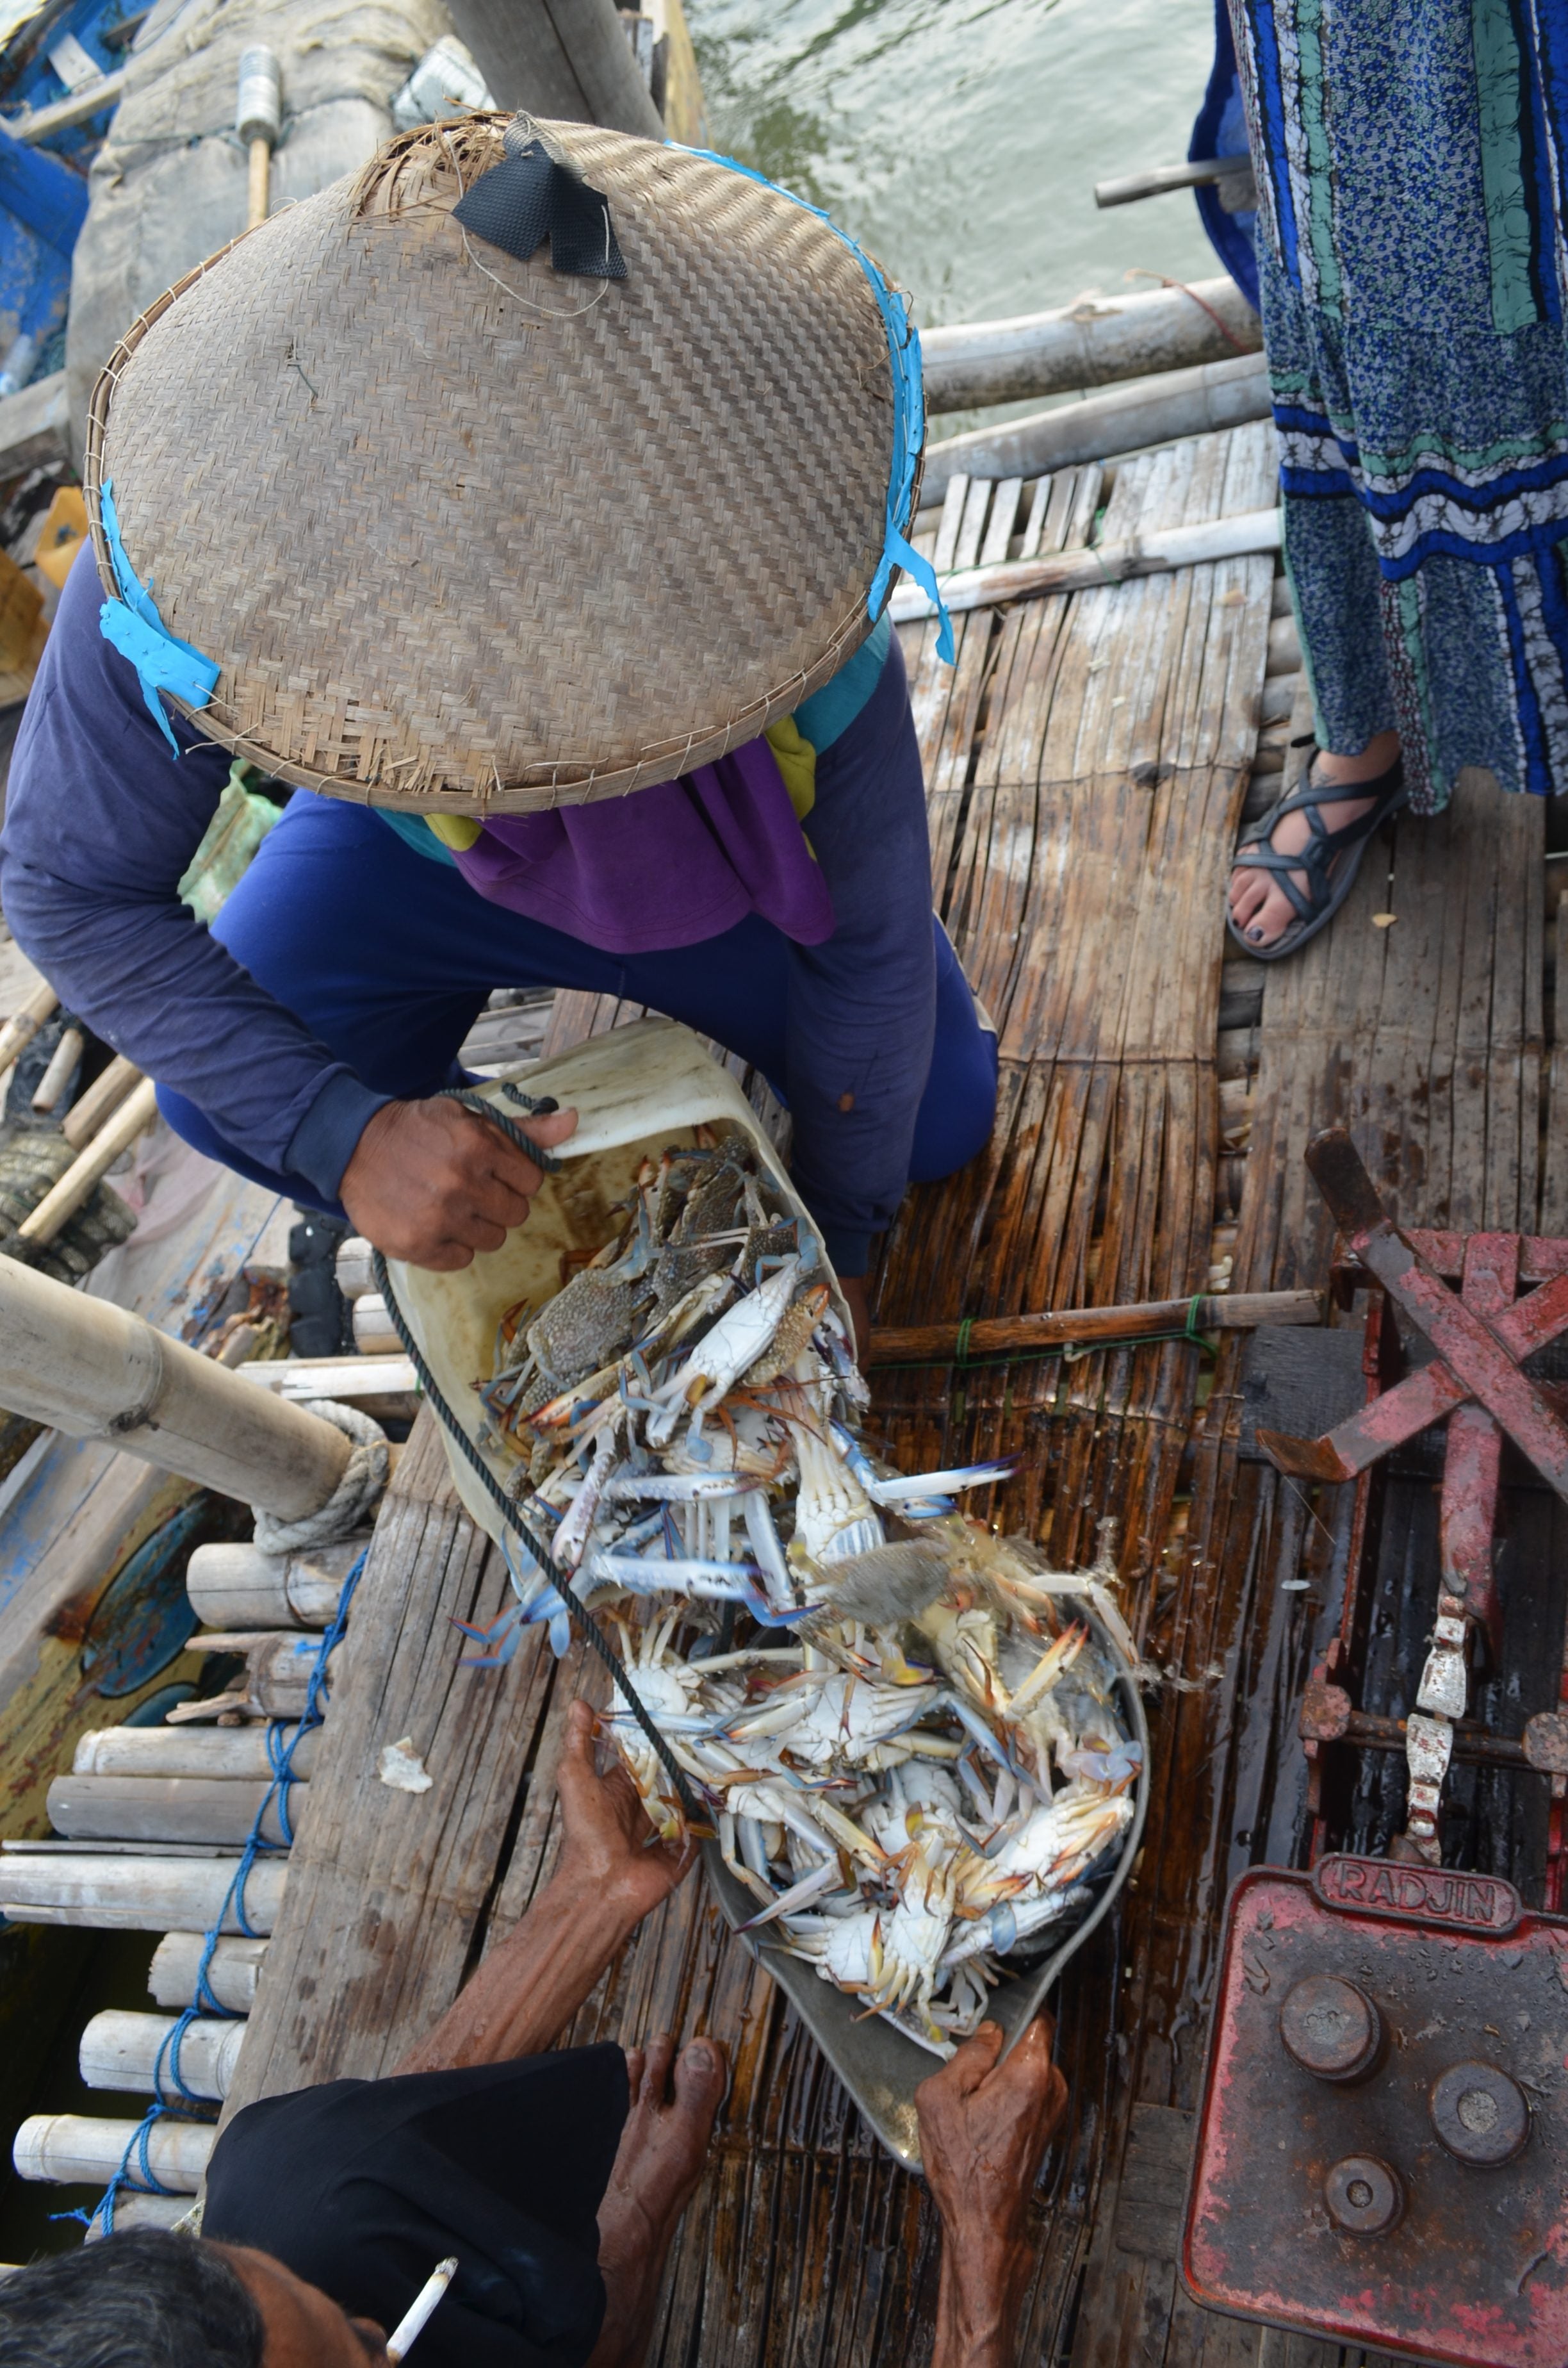 Indonesia advances sustainable fishing